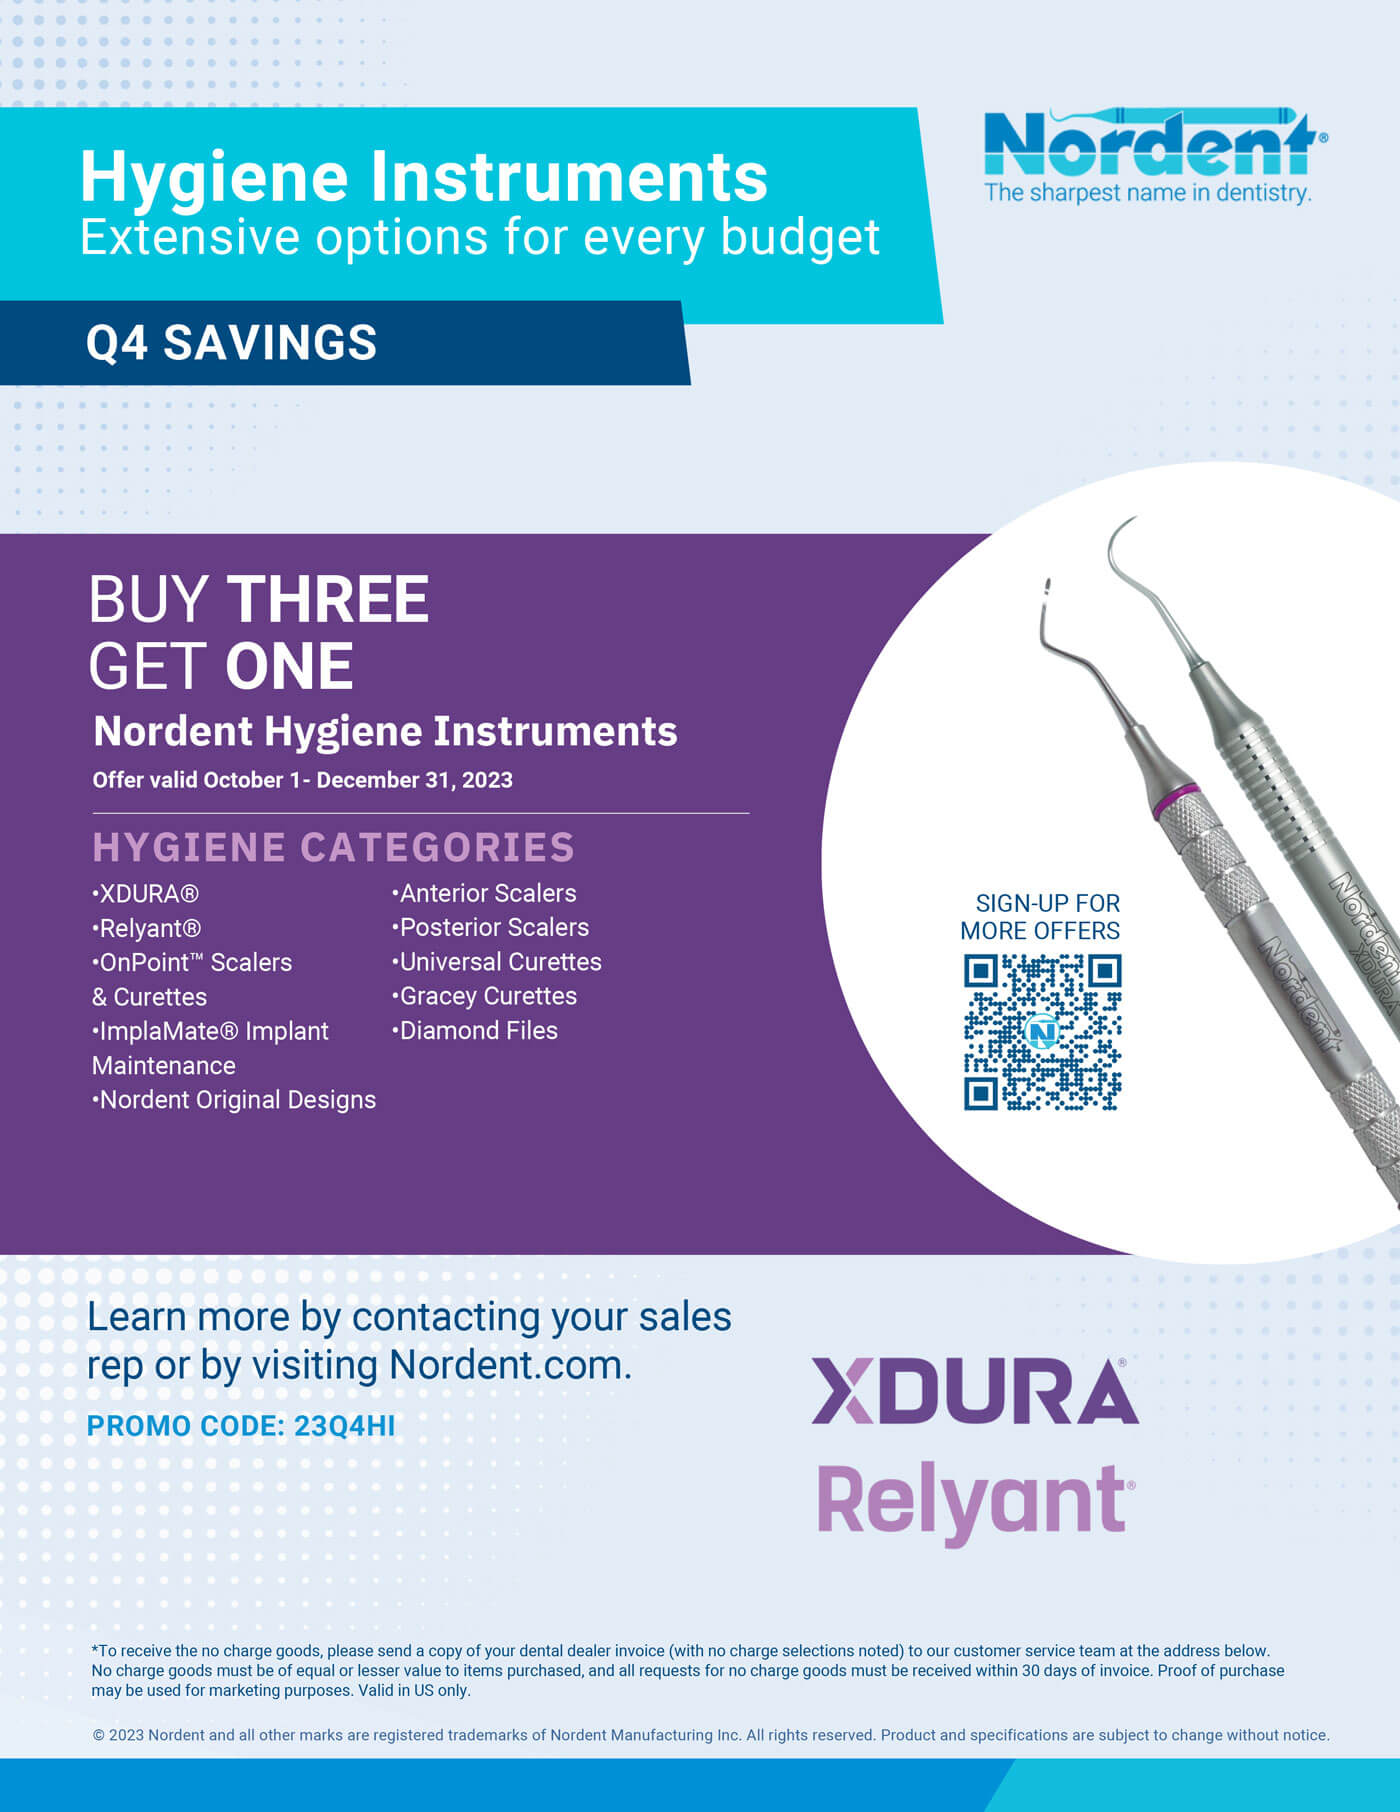 Nordent Q4 Savings: Hygiene Instruments, Buy Three Get One